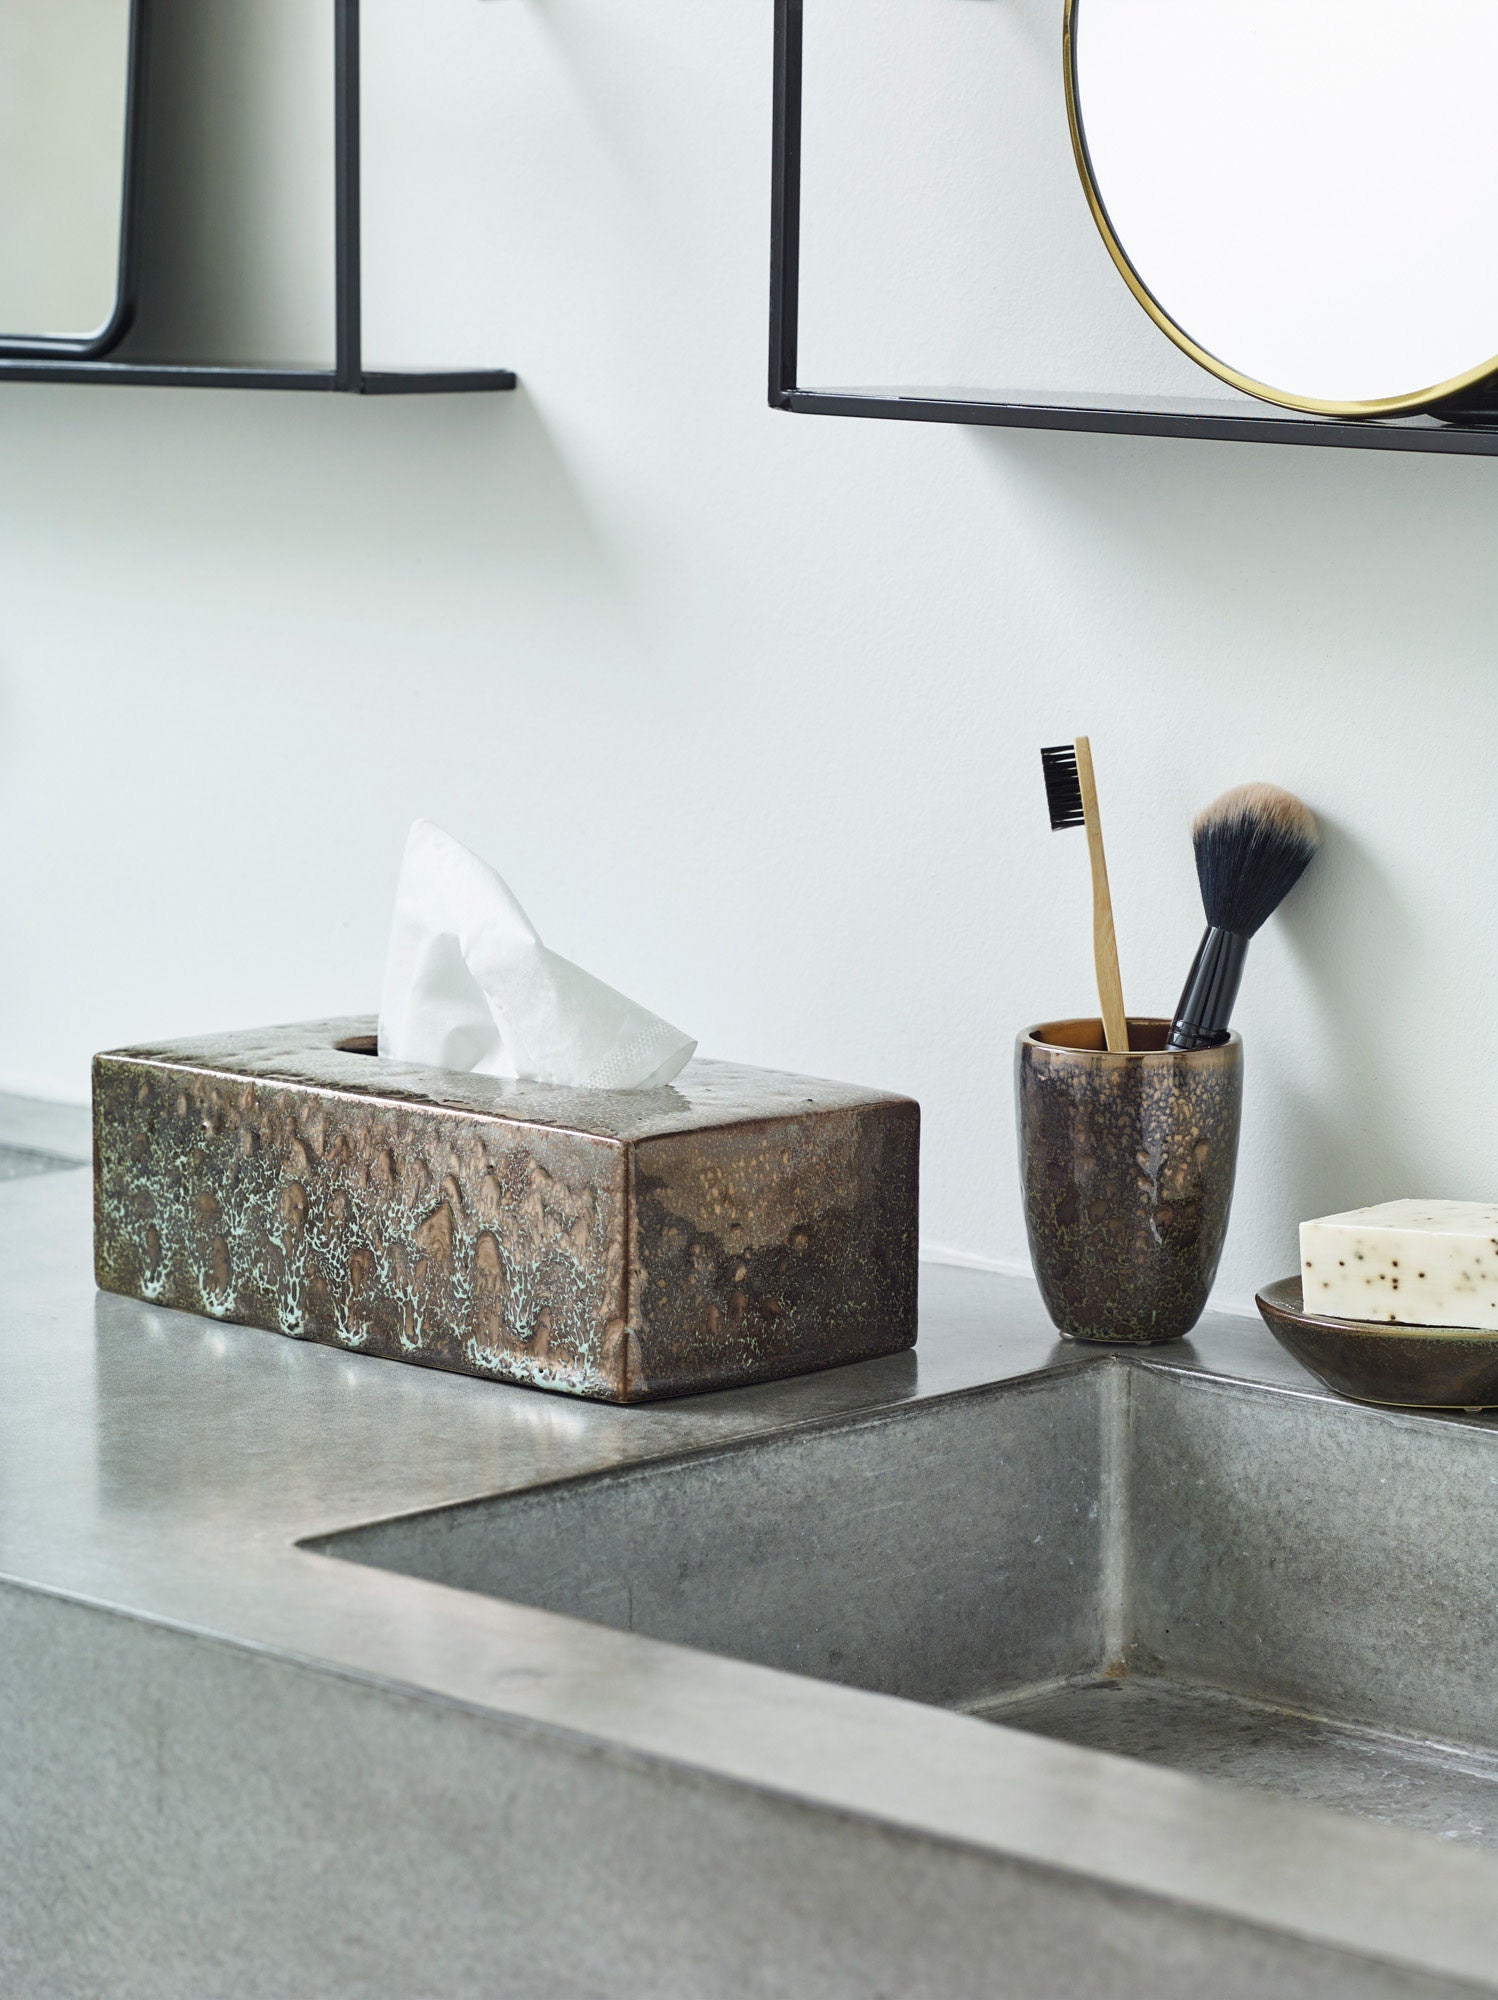 Vintage Bronze Bathroom Accessories - Beauty Box - |VESIMI Design| Luxury and Rustic bathrooms online